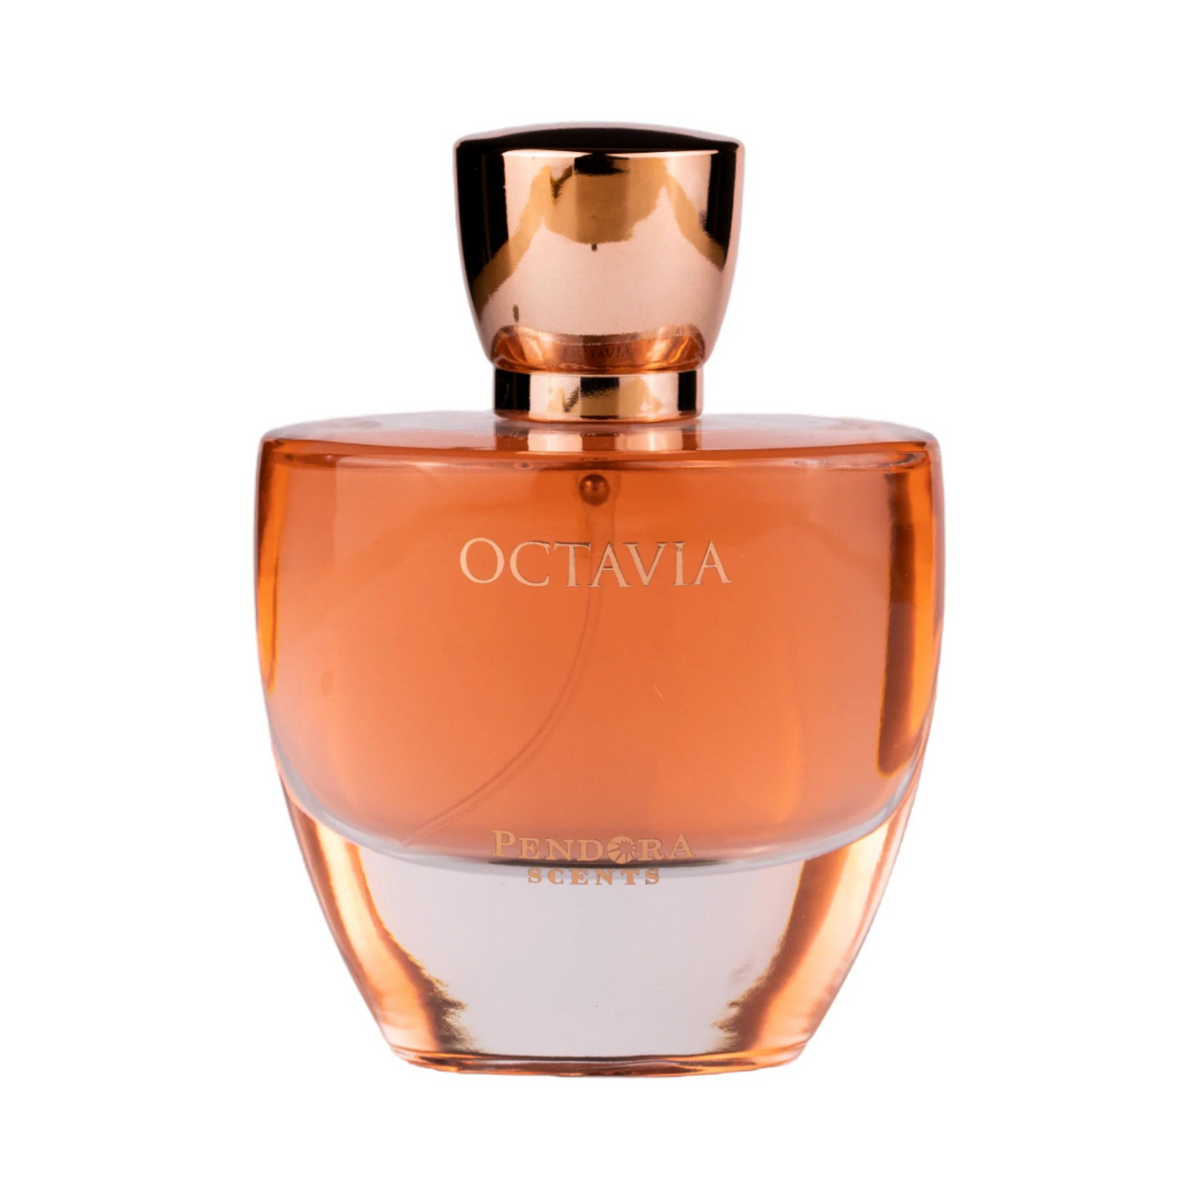 Octavia Pendora Perfume 100ml